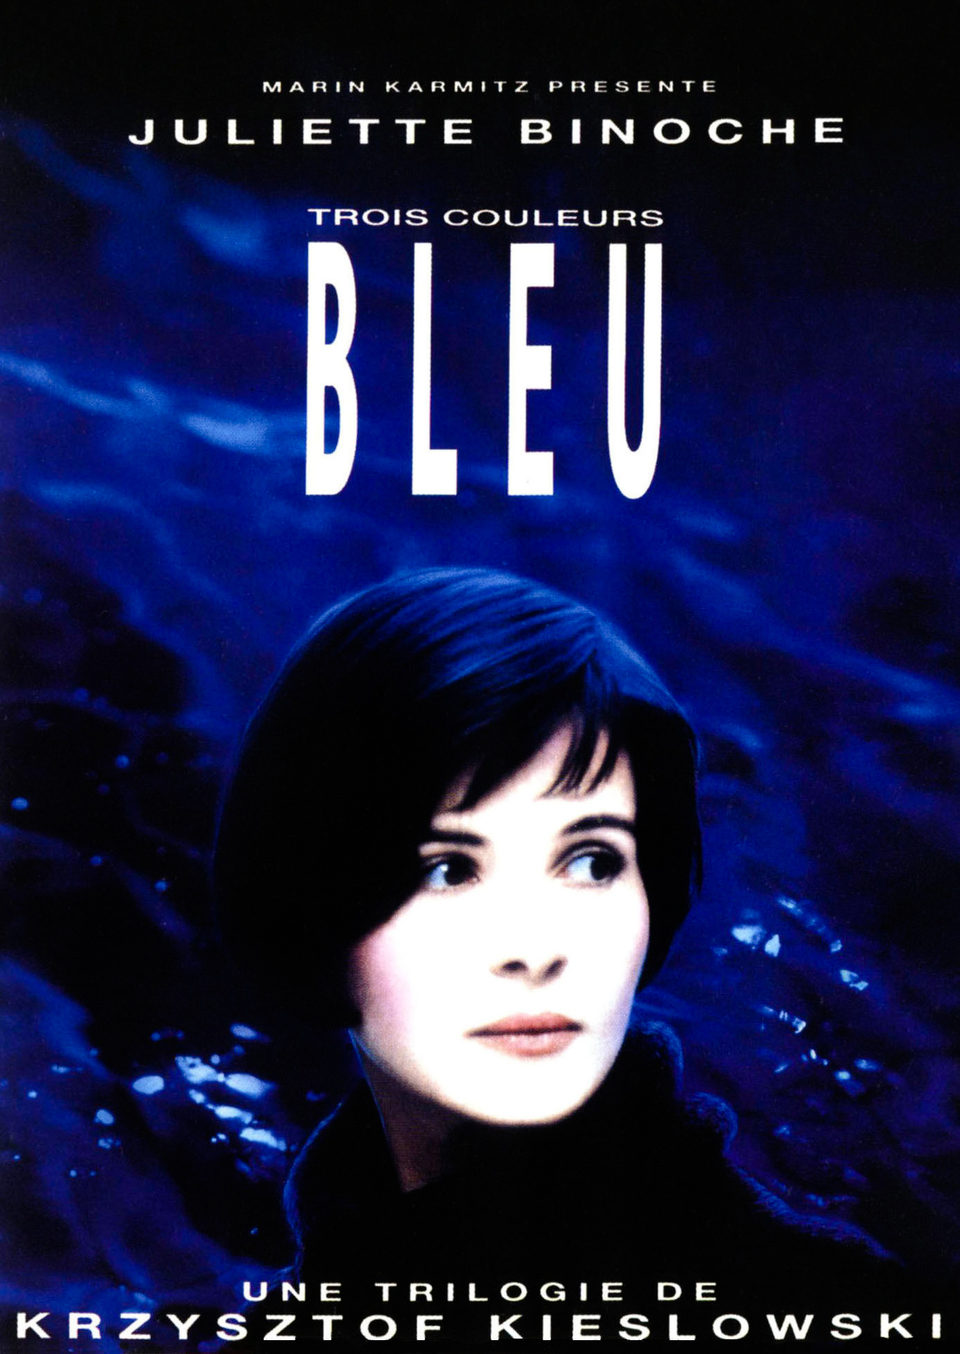 Cartel de Tres colores: Azul - Francia